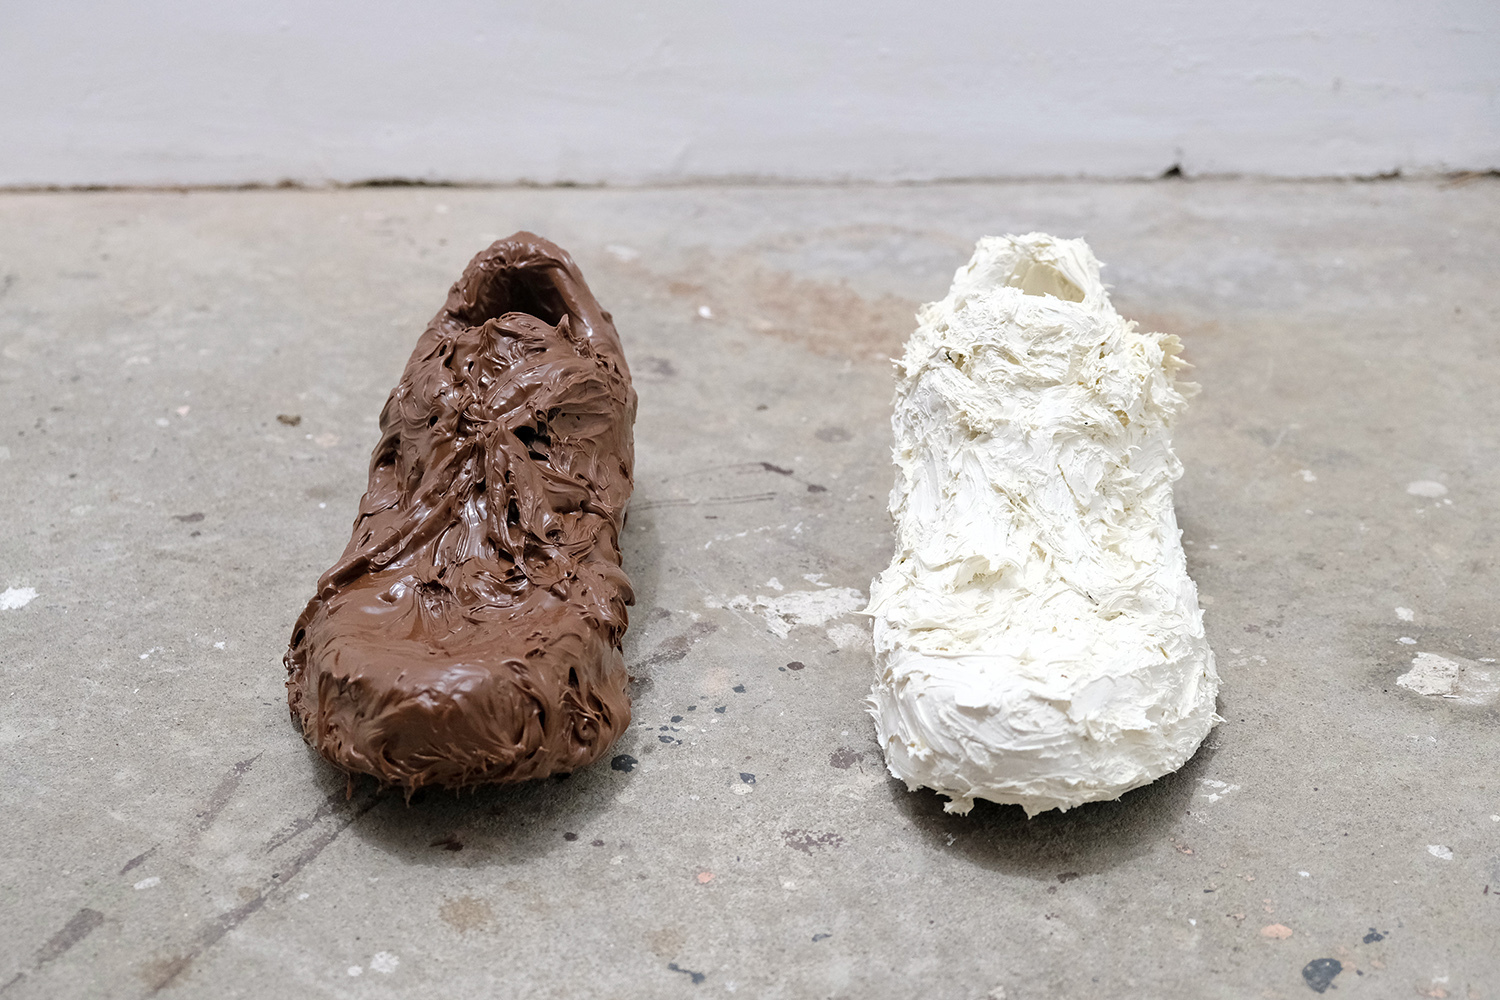 Thomas Rentmeister, 2021, Saucony Kivara, Shoes, Nutella, Penaten Cream, 33 x 34 x 14 cm, 8